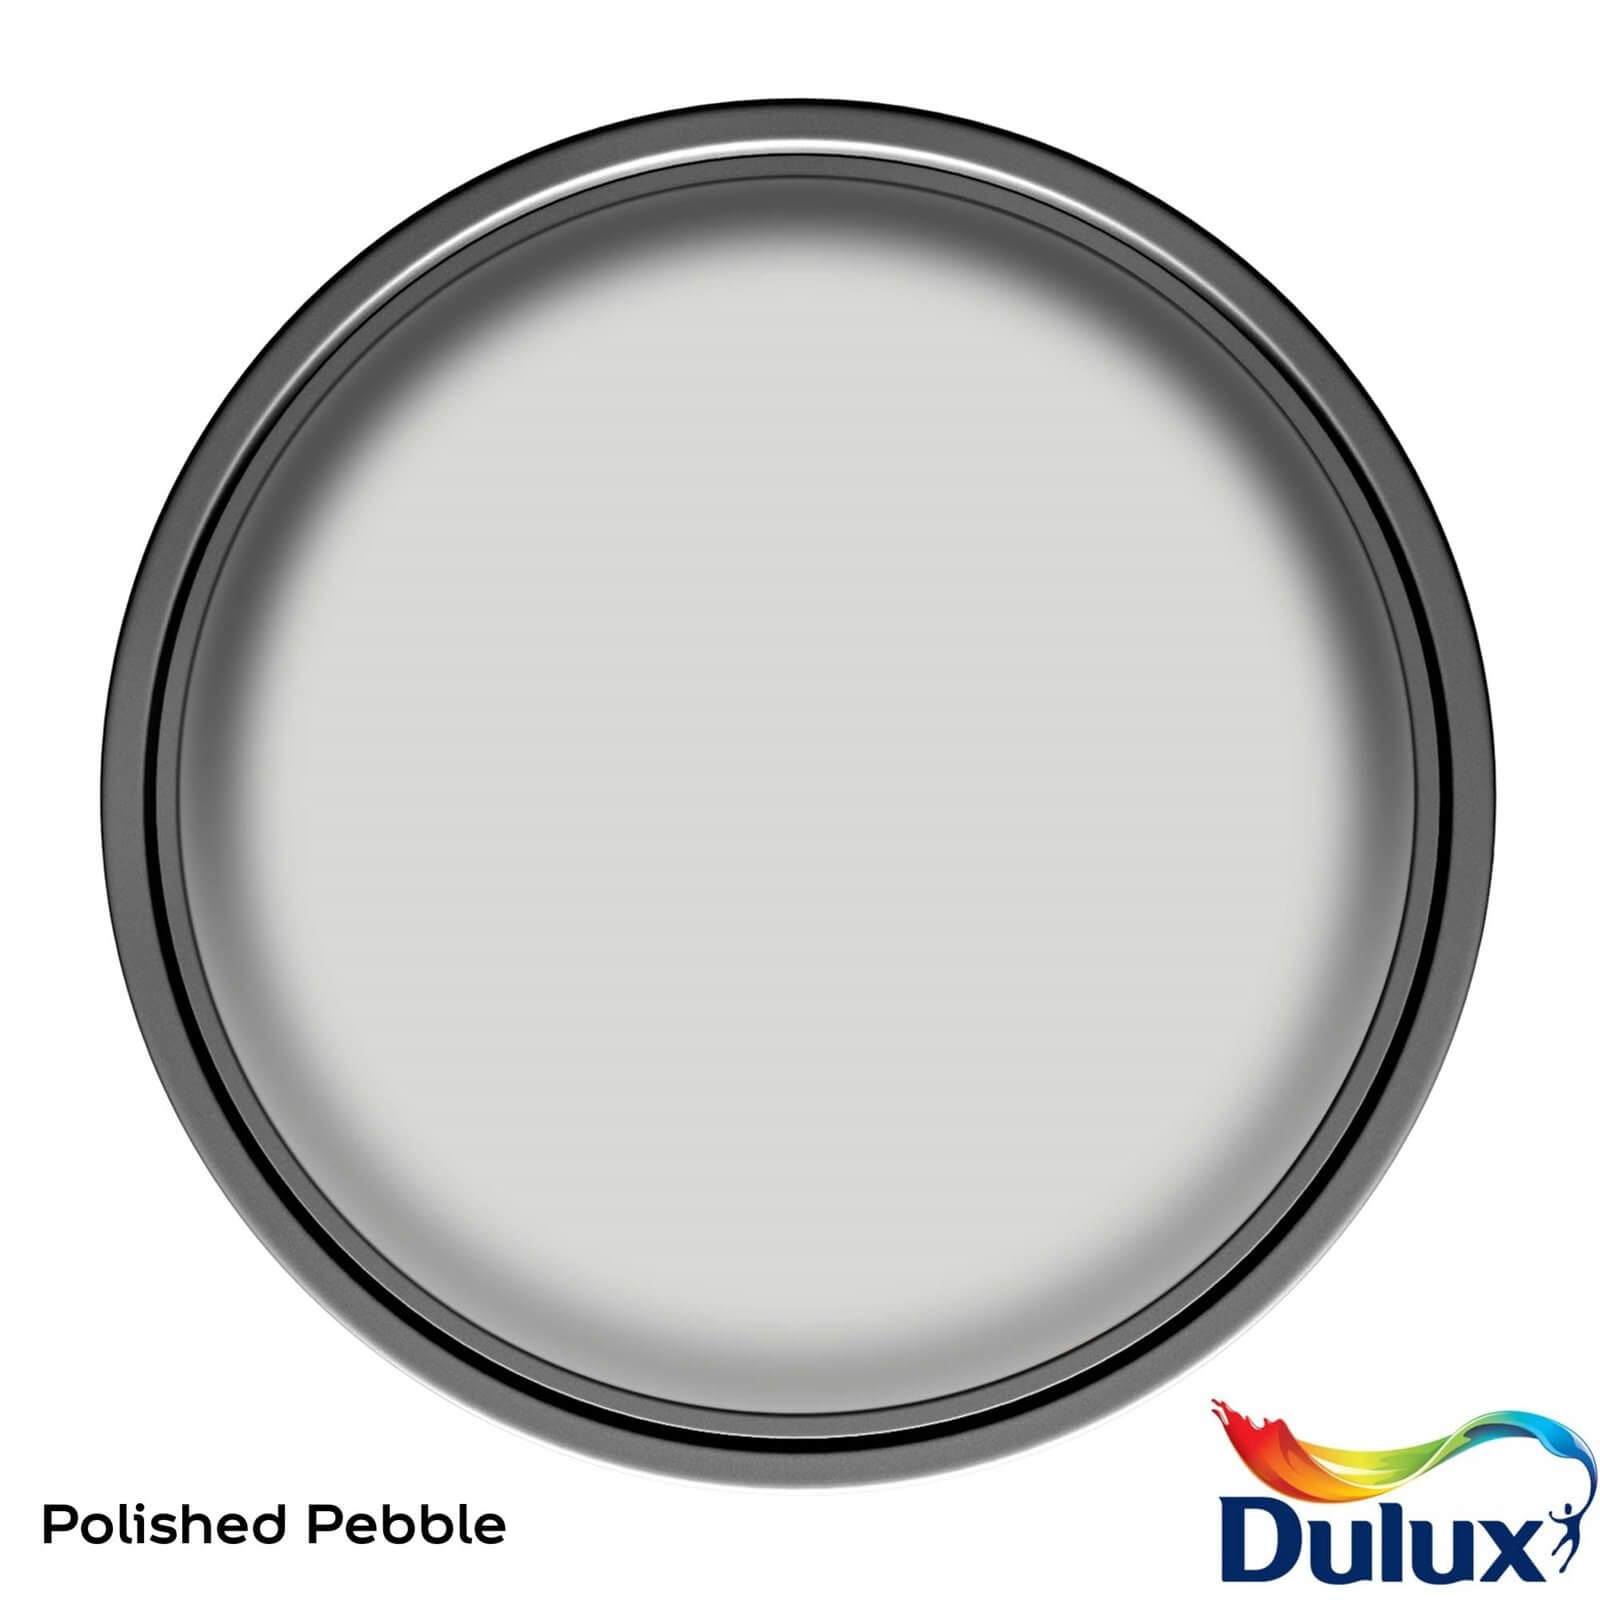 Dulux Matt Emulsion Paint Polished Pebble - 2.5L